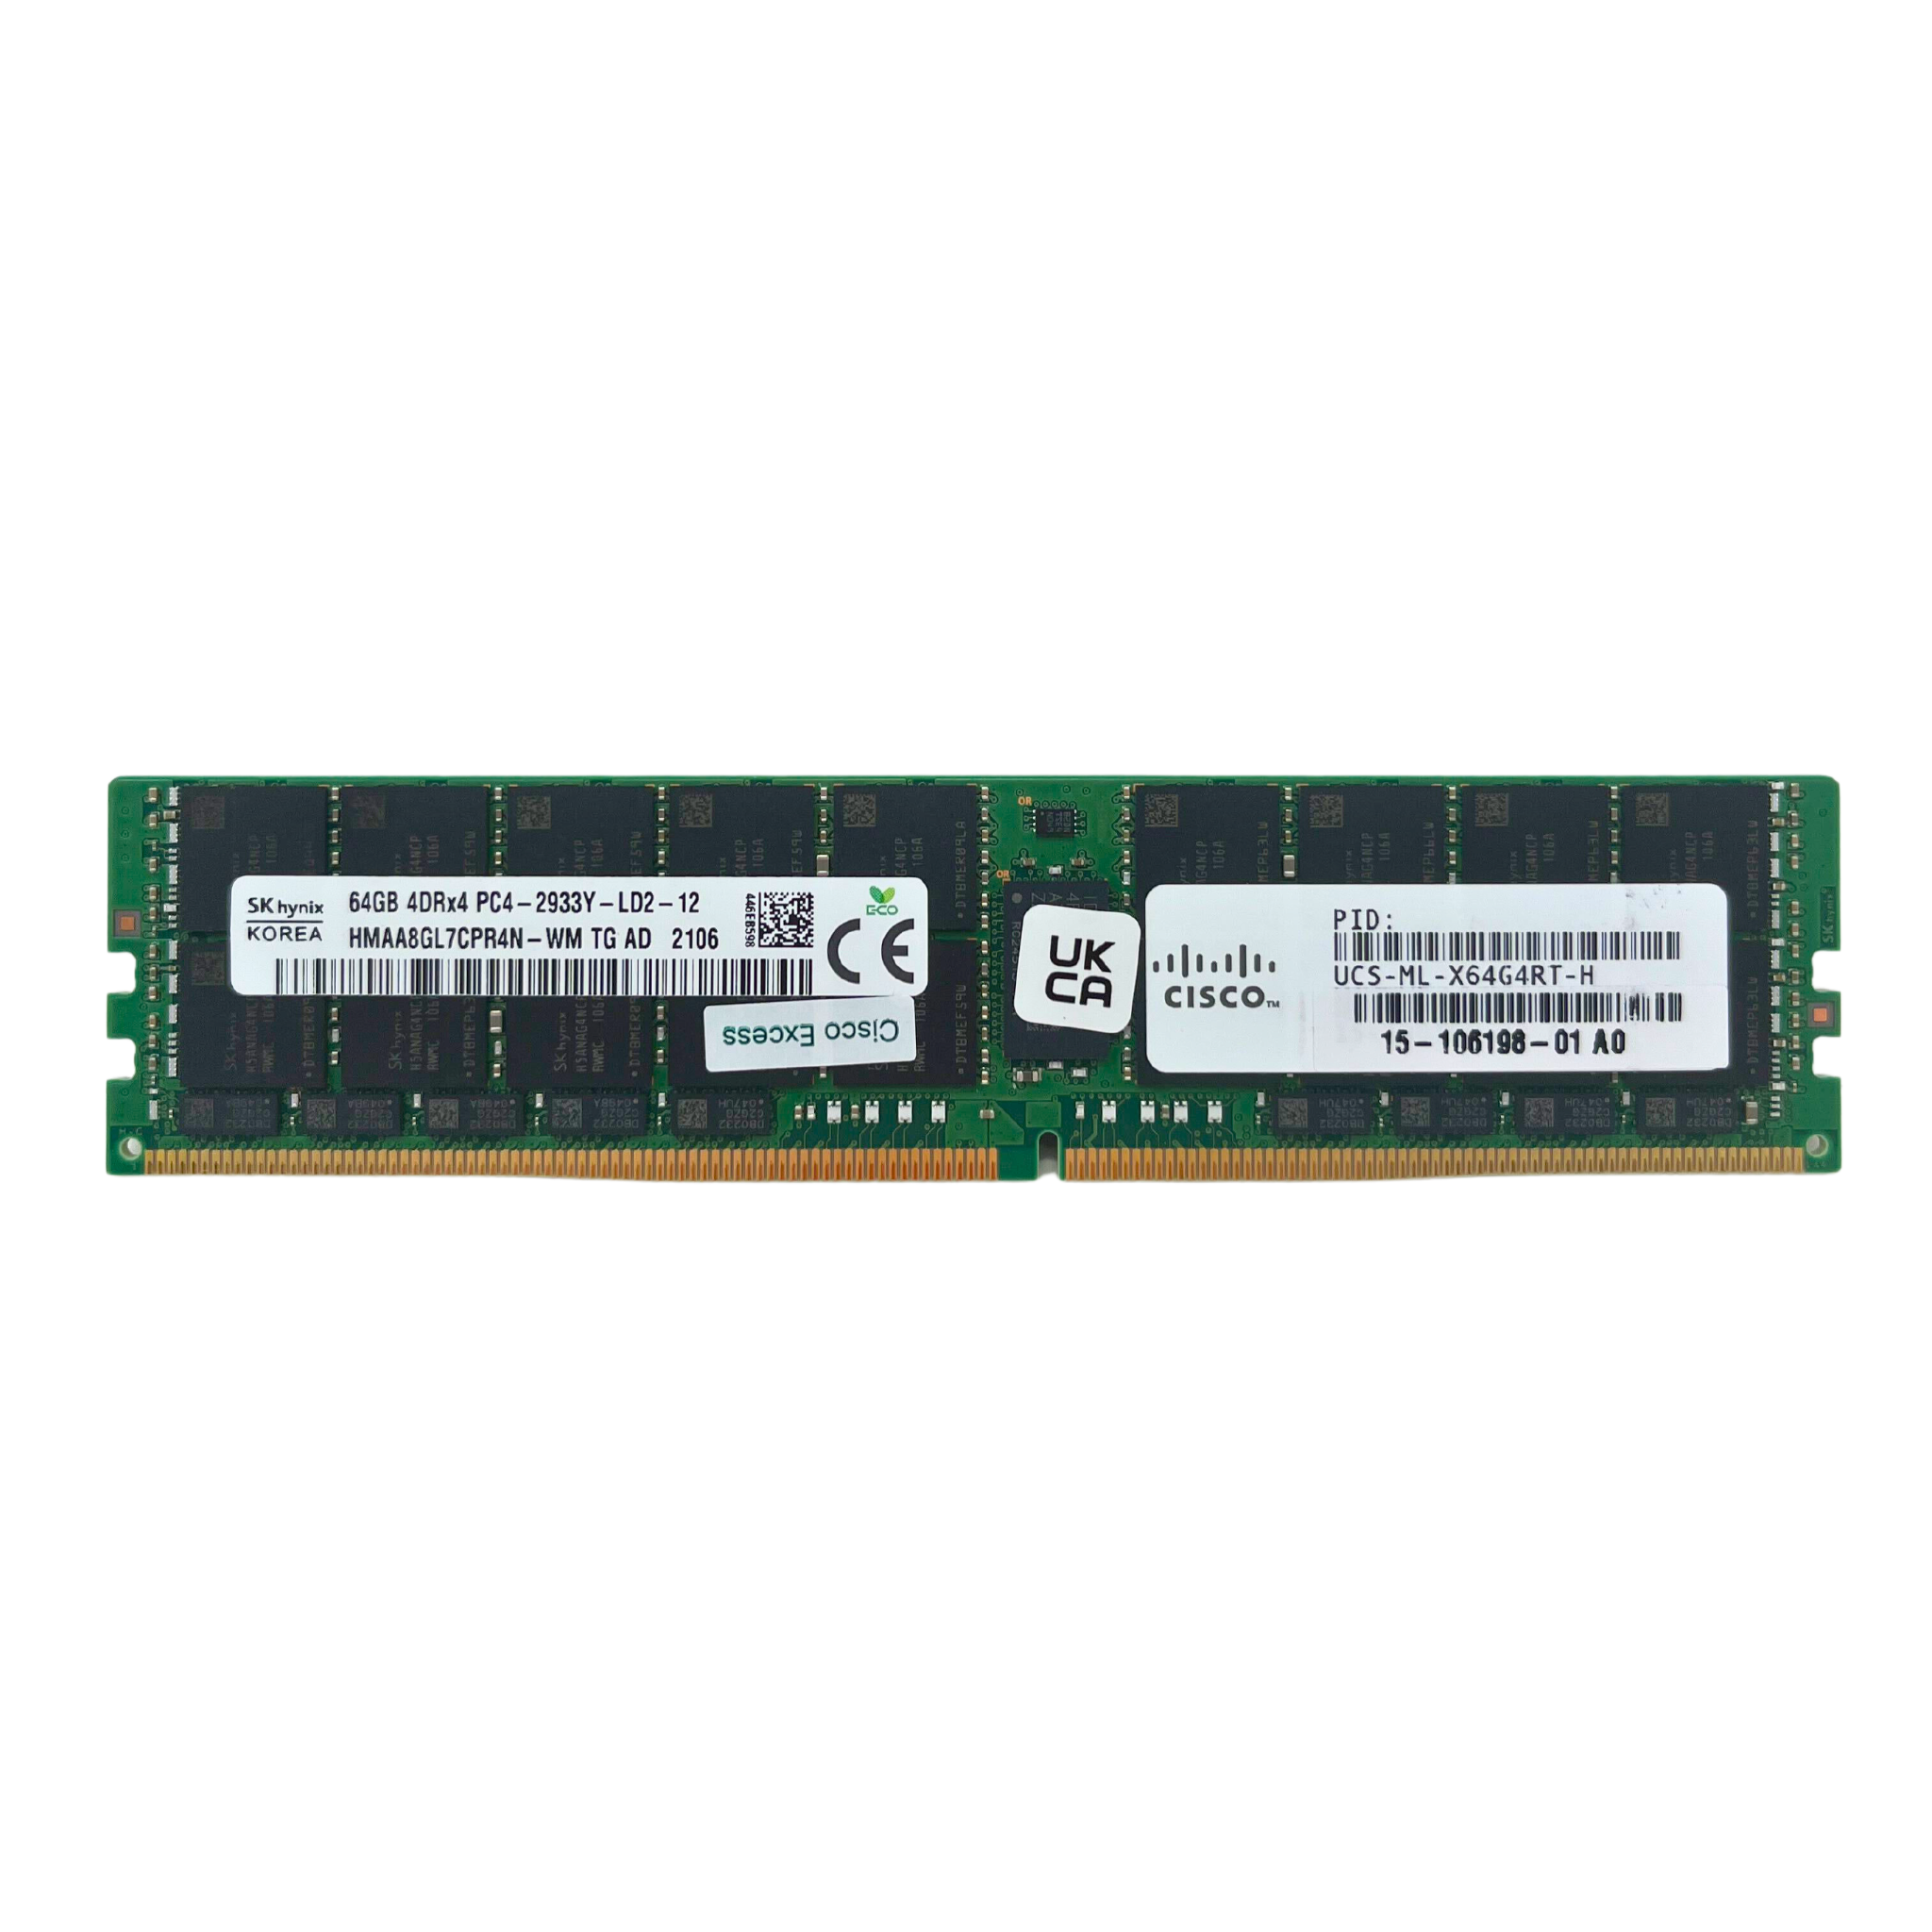 Cisco 64GB 4DRX4 PC4-2933Y  ECC  Registered  LRDIMM Memory  (HMAA8GL7CPR4N-WM TG AA-CISCO)